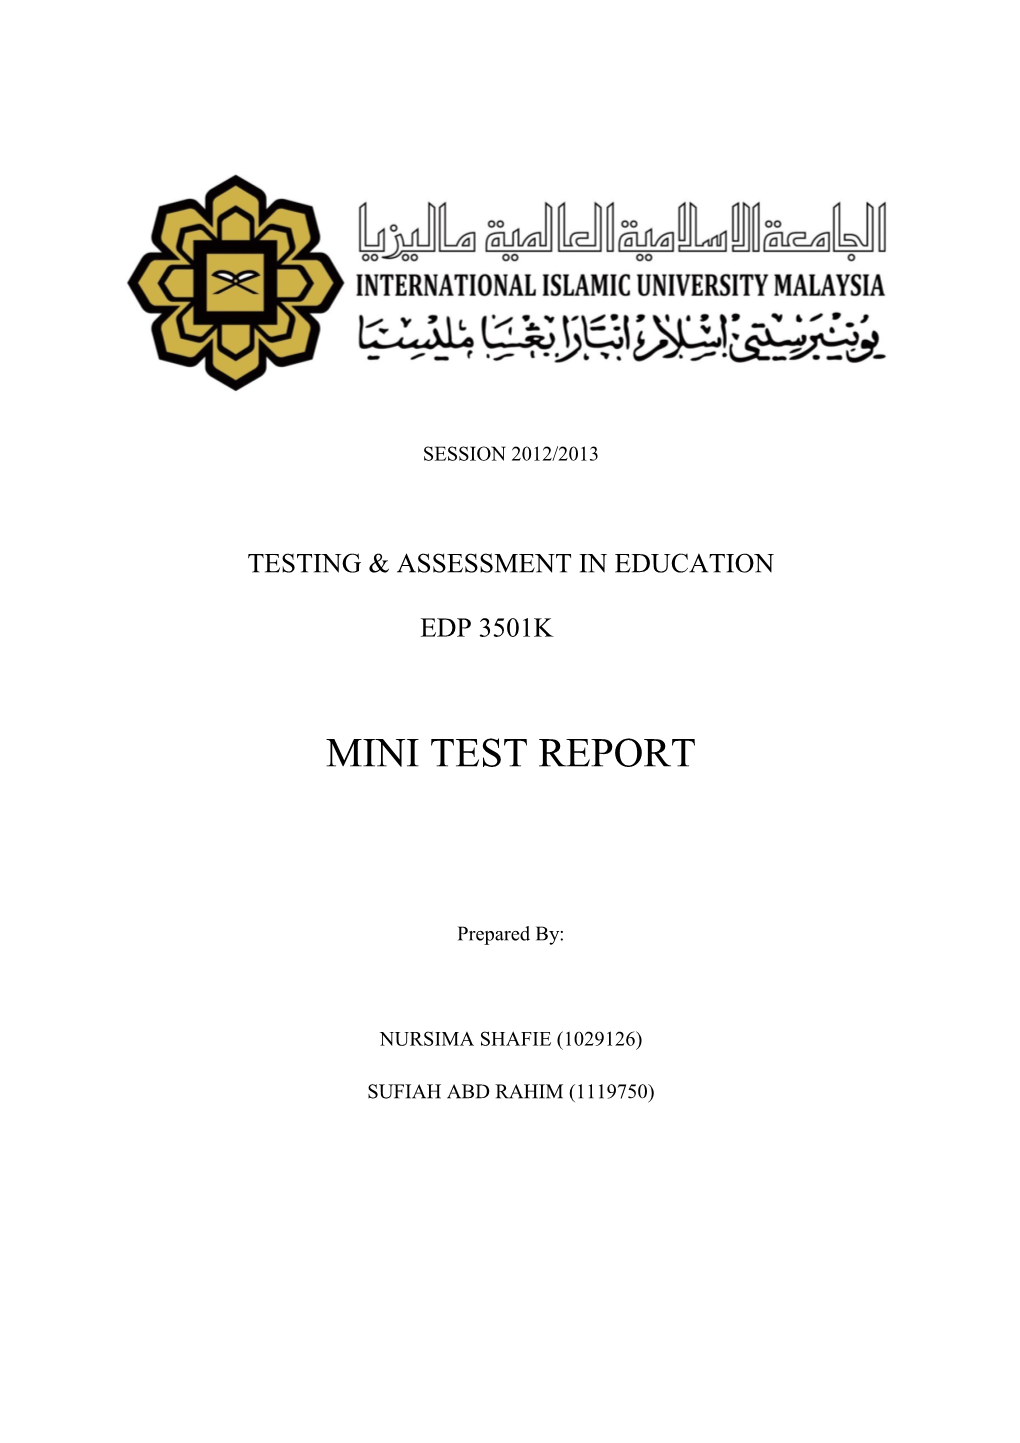 Testing & Assessment in Education